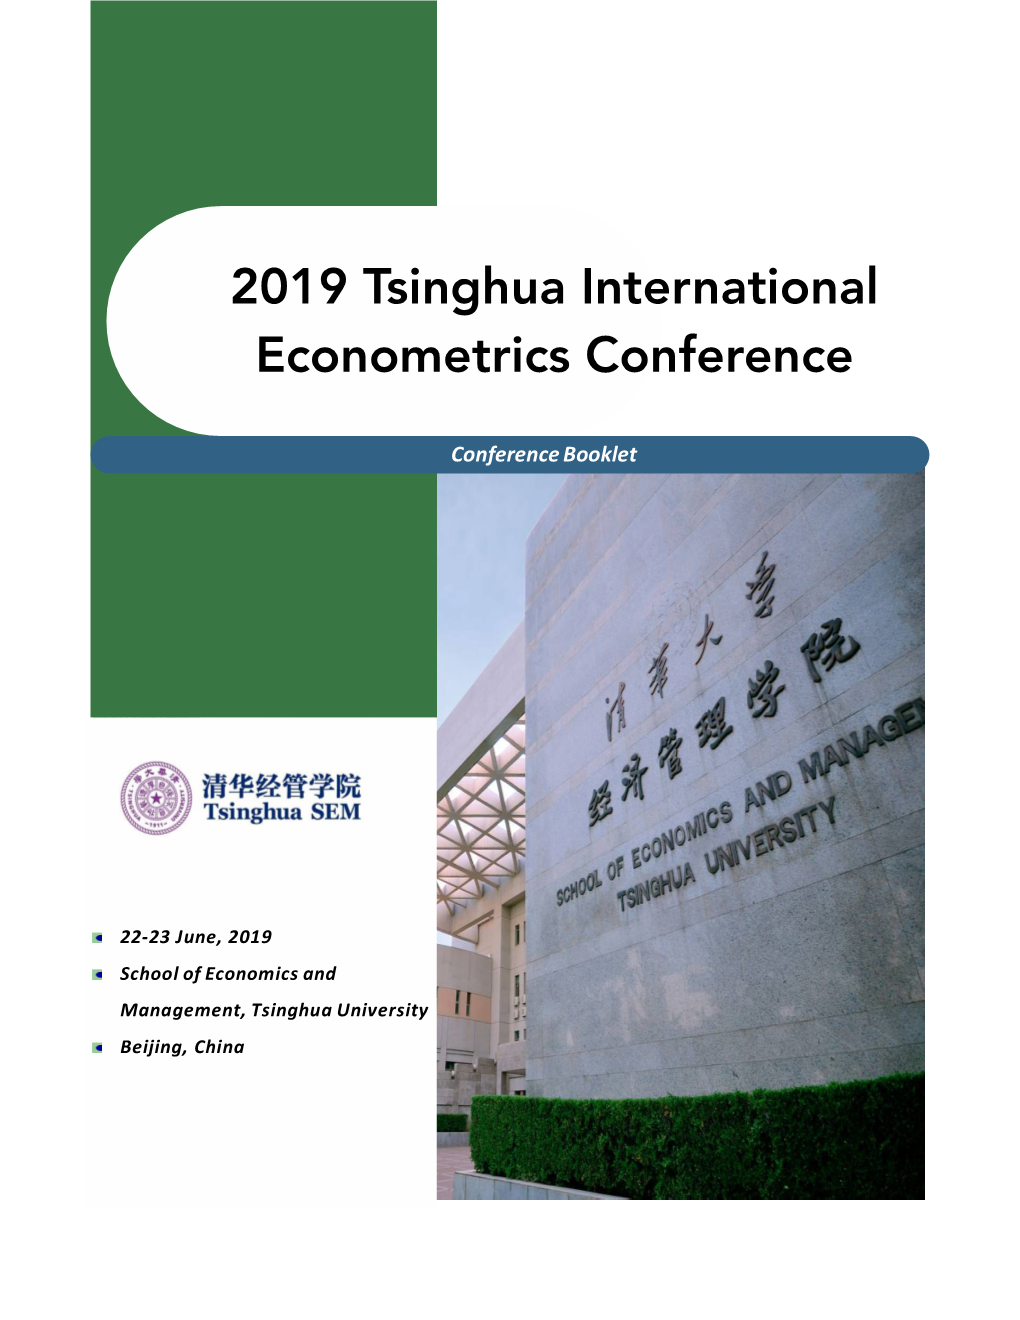 2019 Tsinghua International Econometrics Conference WELCOME